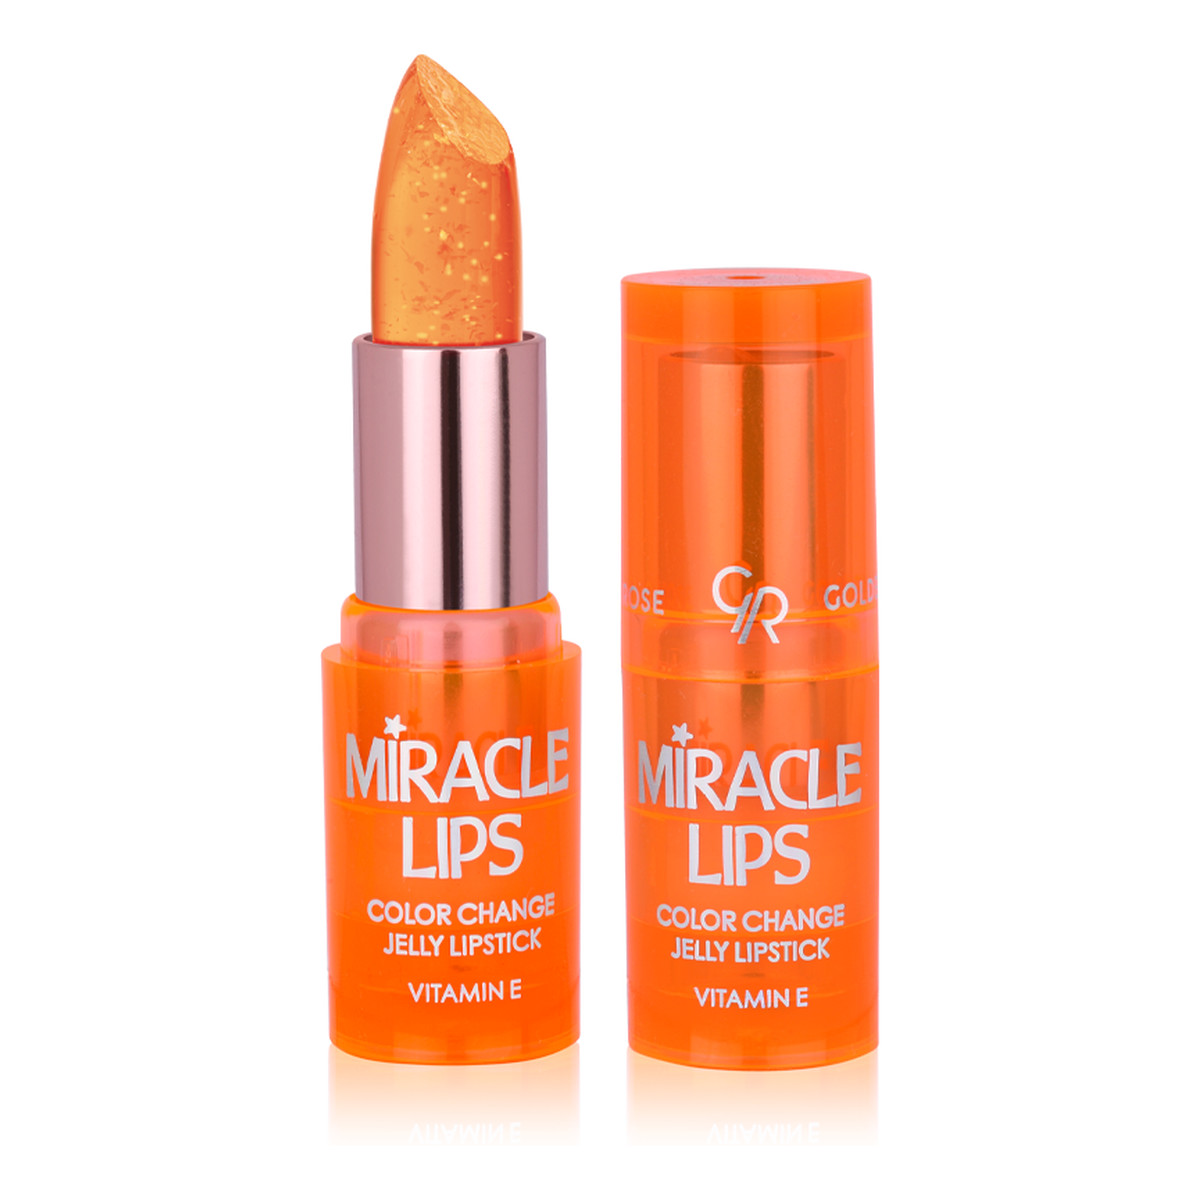 Golden Rose Miracle Lips Color Change Jelly Lipstick Żelowa pomadka do ust zmieniająca kolor 3.7g